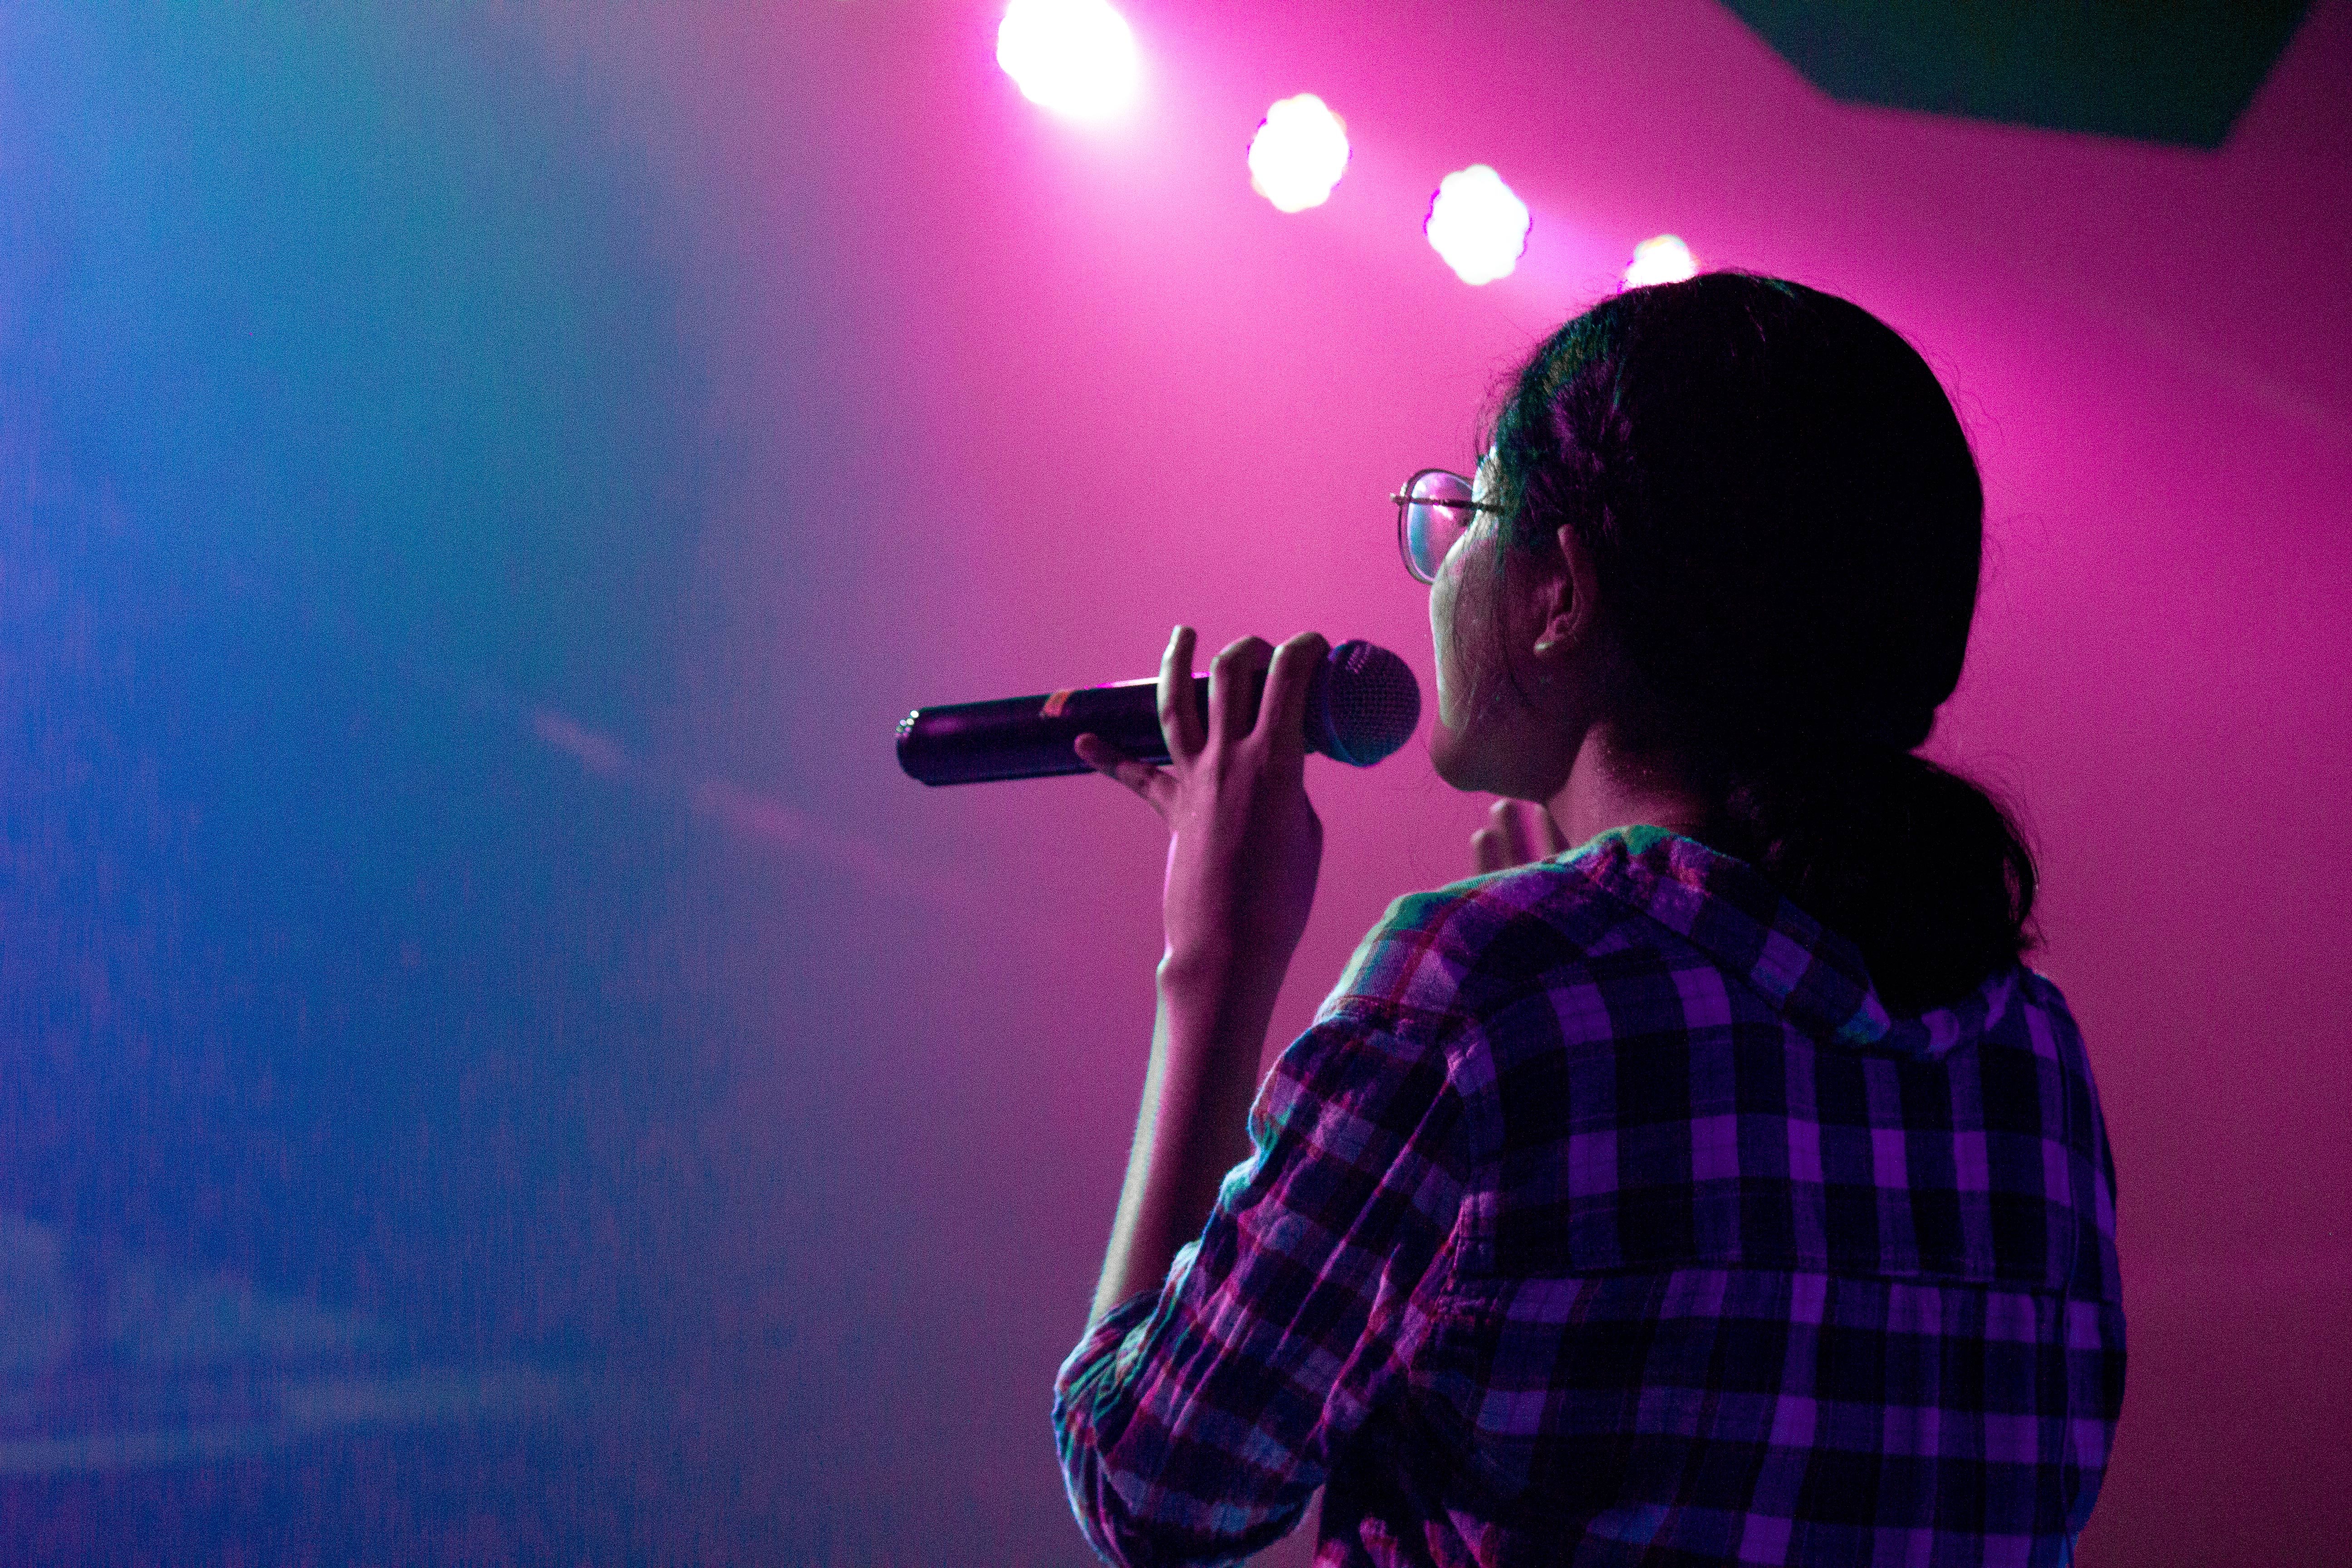 A woman singing karaoke on stage